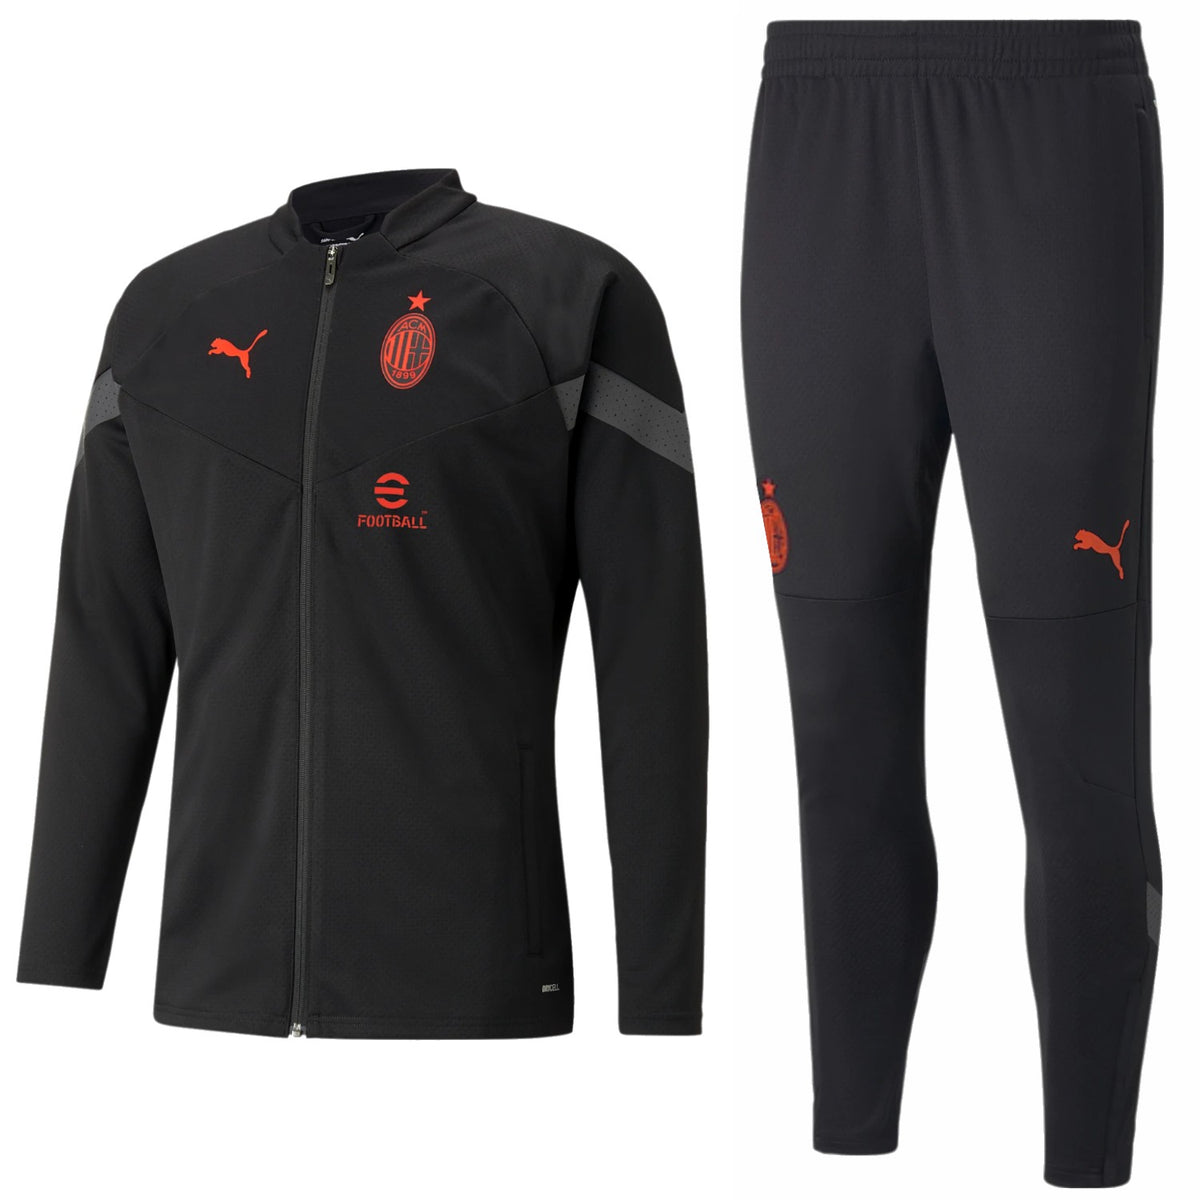 Adidas A.C. Milan Track Suit Pants + Jacket Set Black Olive